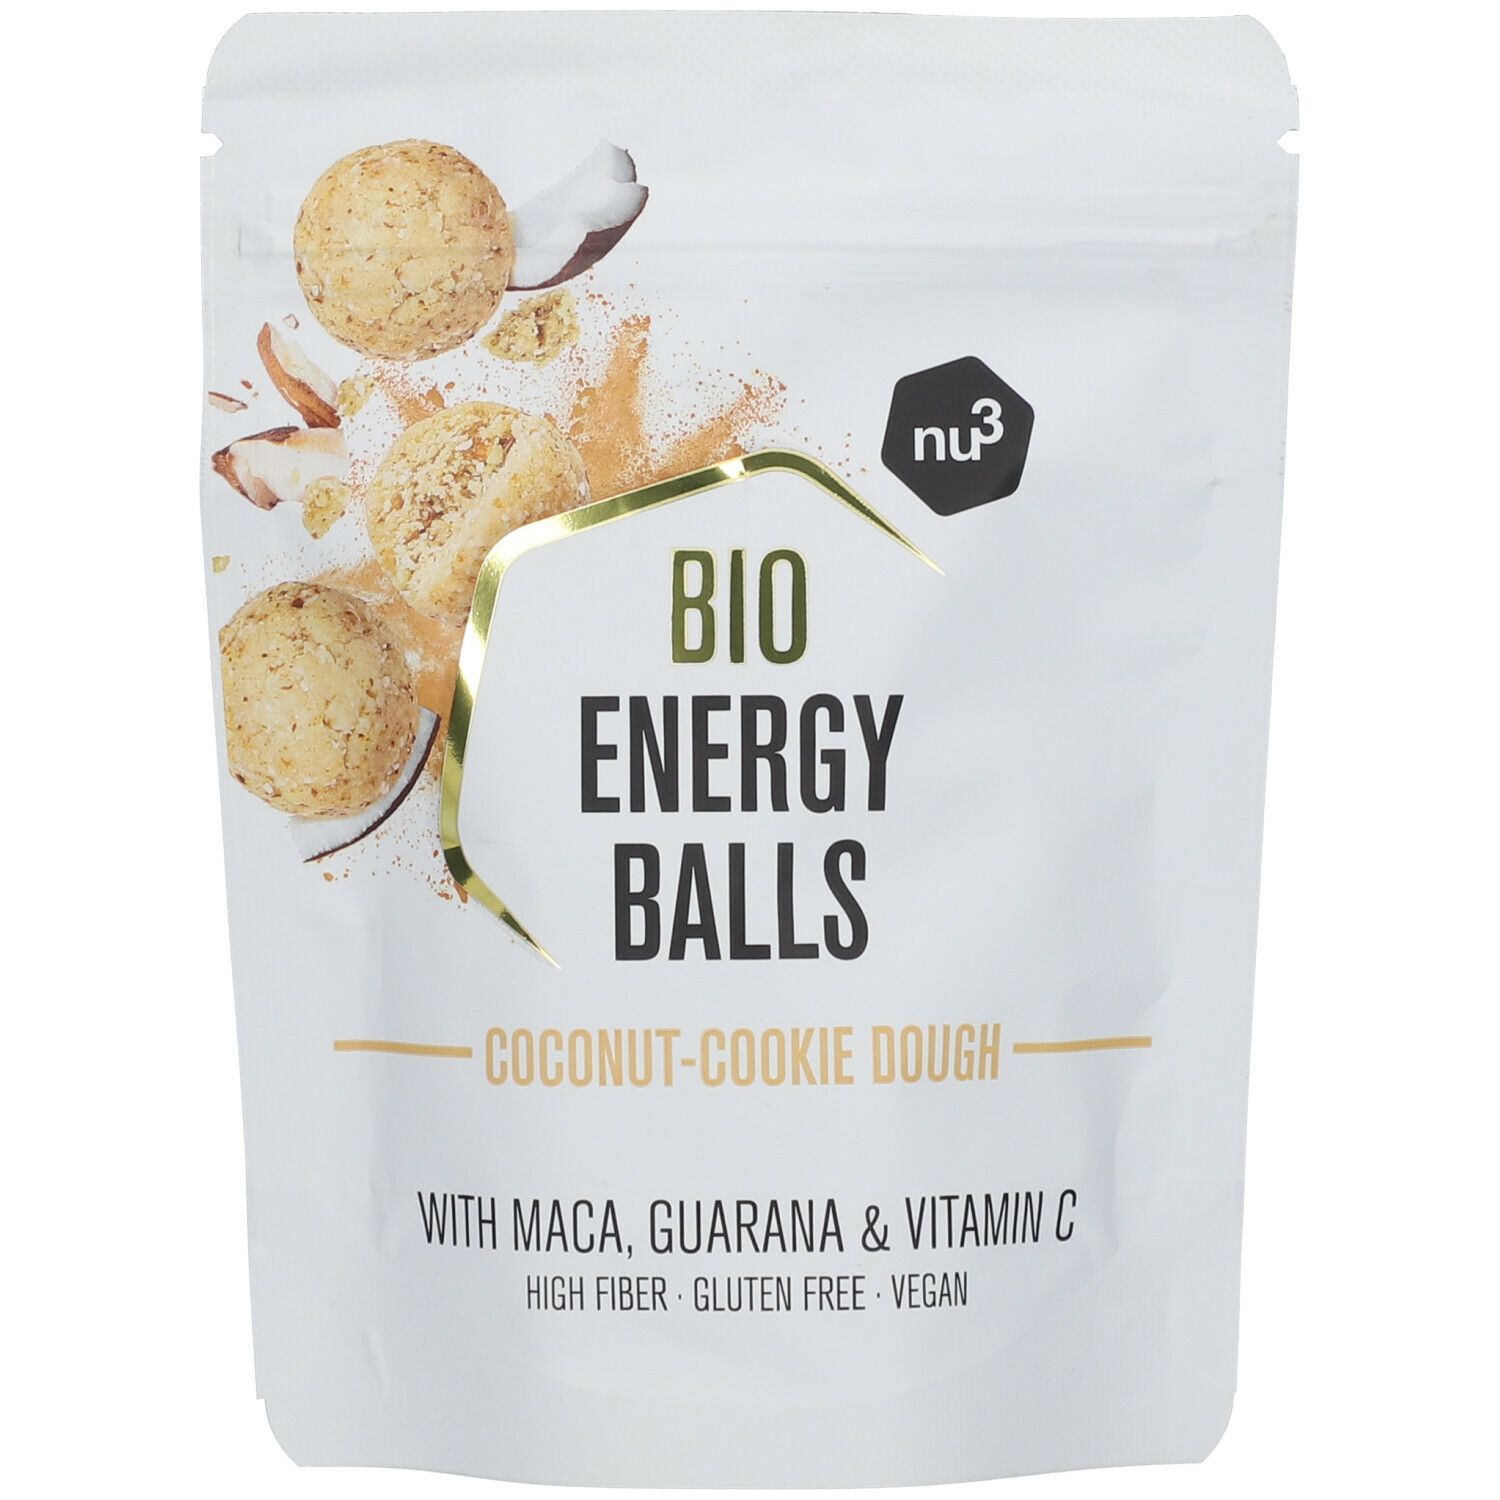 Image of nu3 Bio Energy Balls, Coconut-Cookie Dough